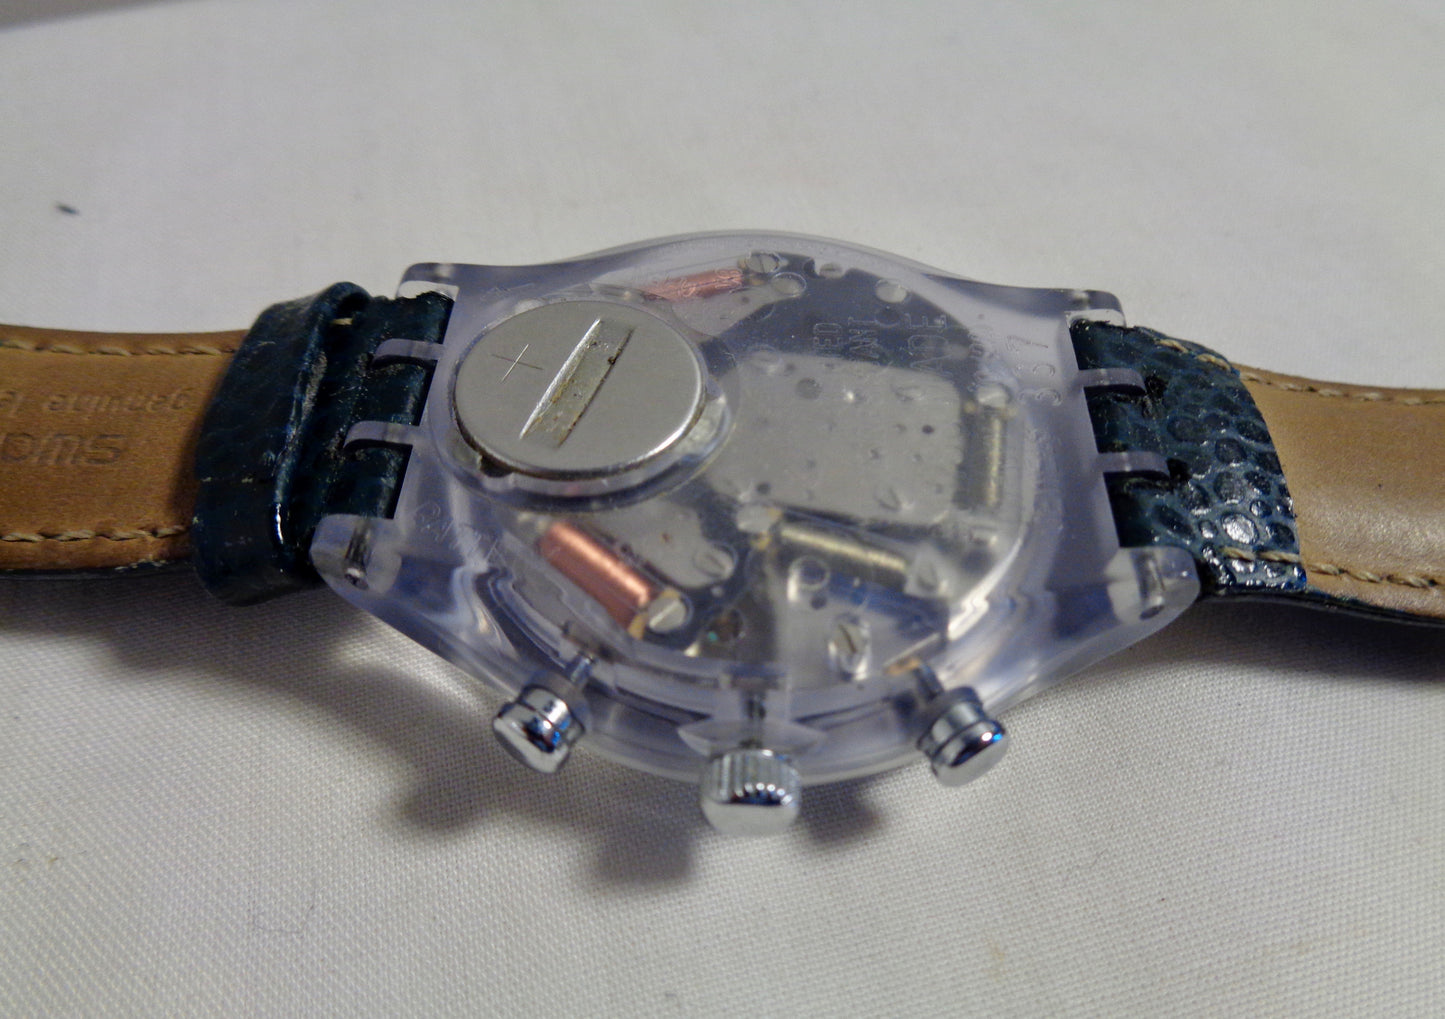 1993 SWATCH Greentic SVC100 Chronograph Watch